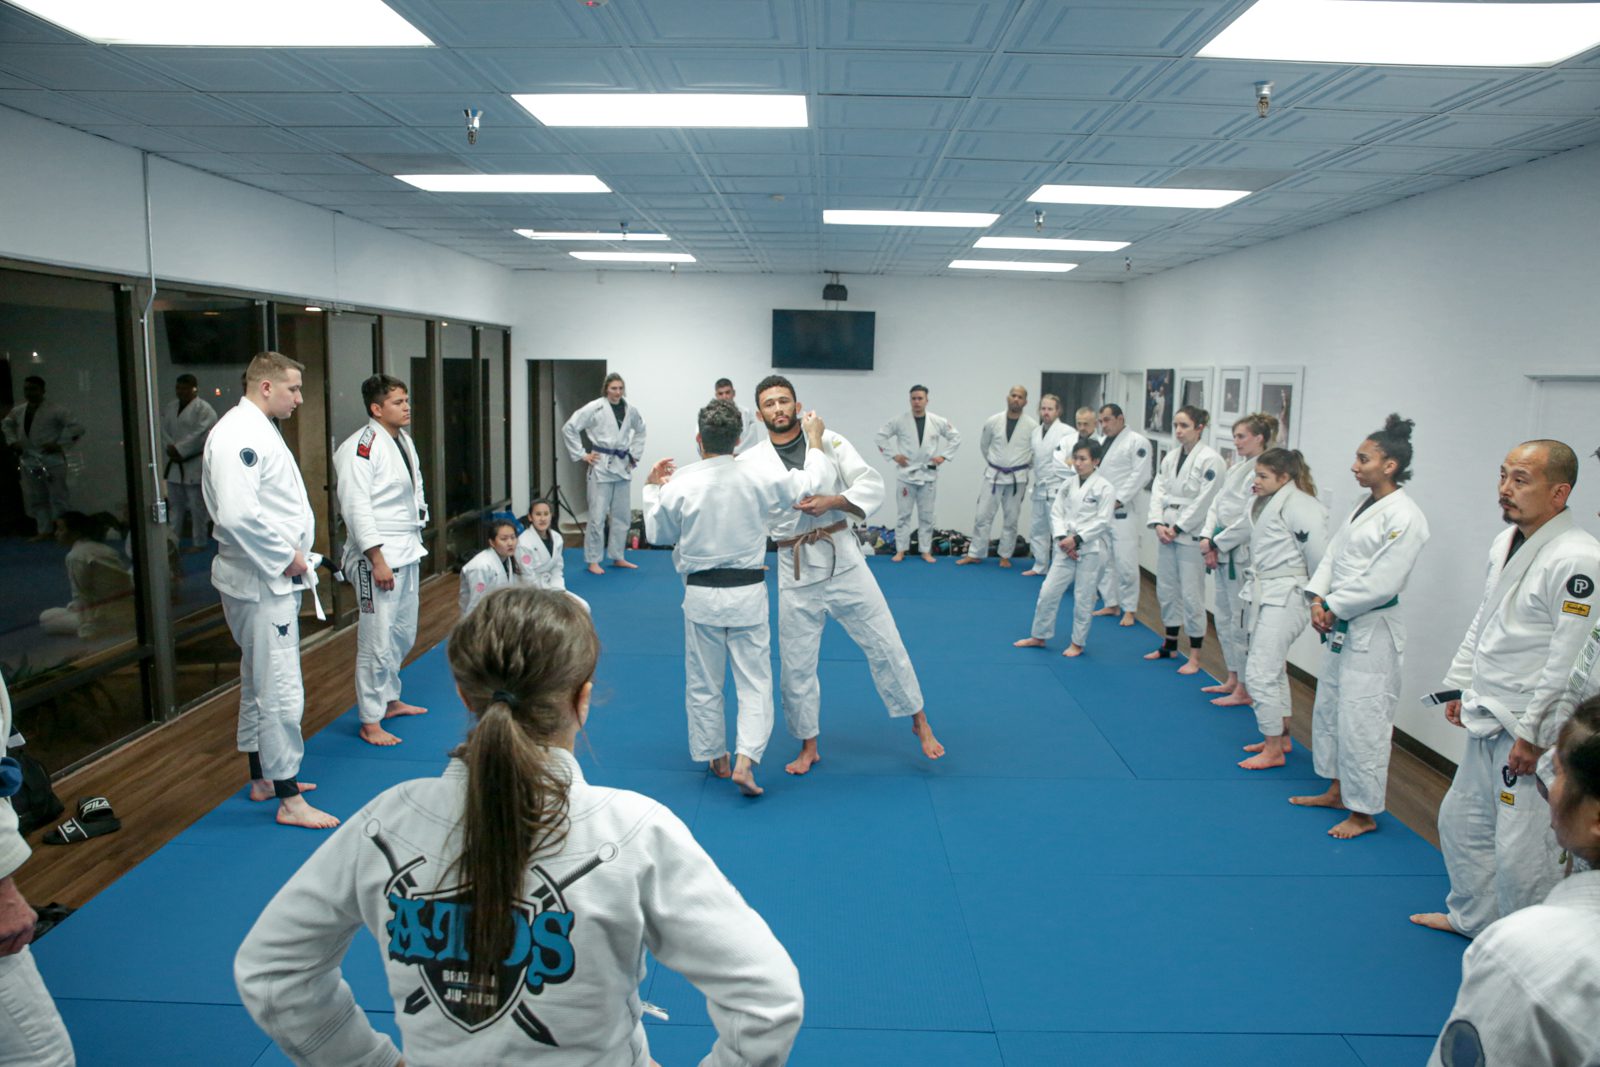 New Class Judo - Atos Jiu-Jitsu HQ - Worlds Best BJJ Academy